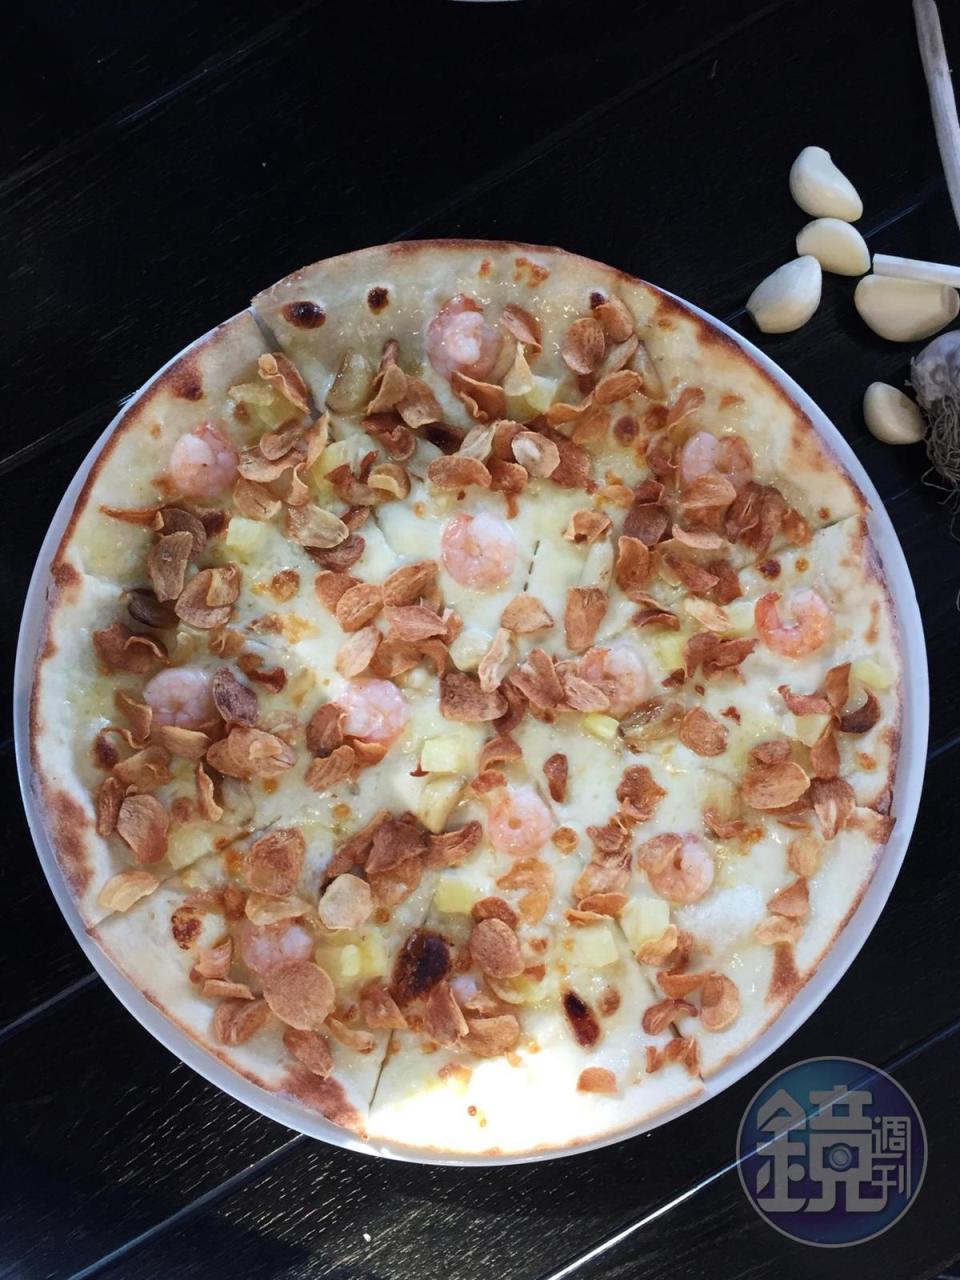 「Garlic Snowing Pizza」是撒上炸蒜片的鳳梨鮮蝦披薩，點單率很高。（22,800韓元／份，約NT$625）